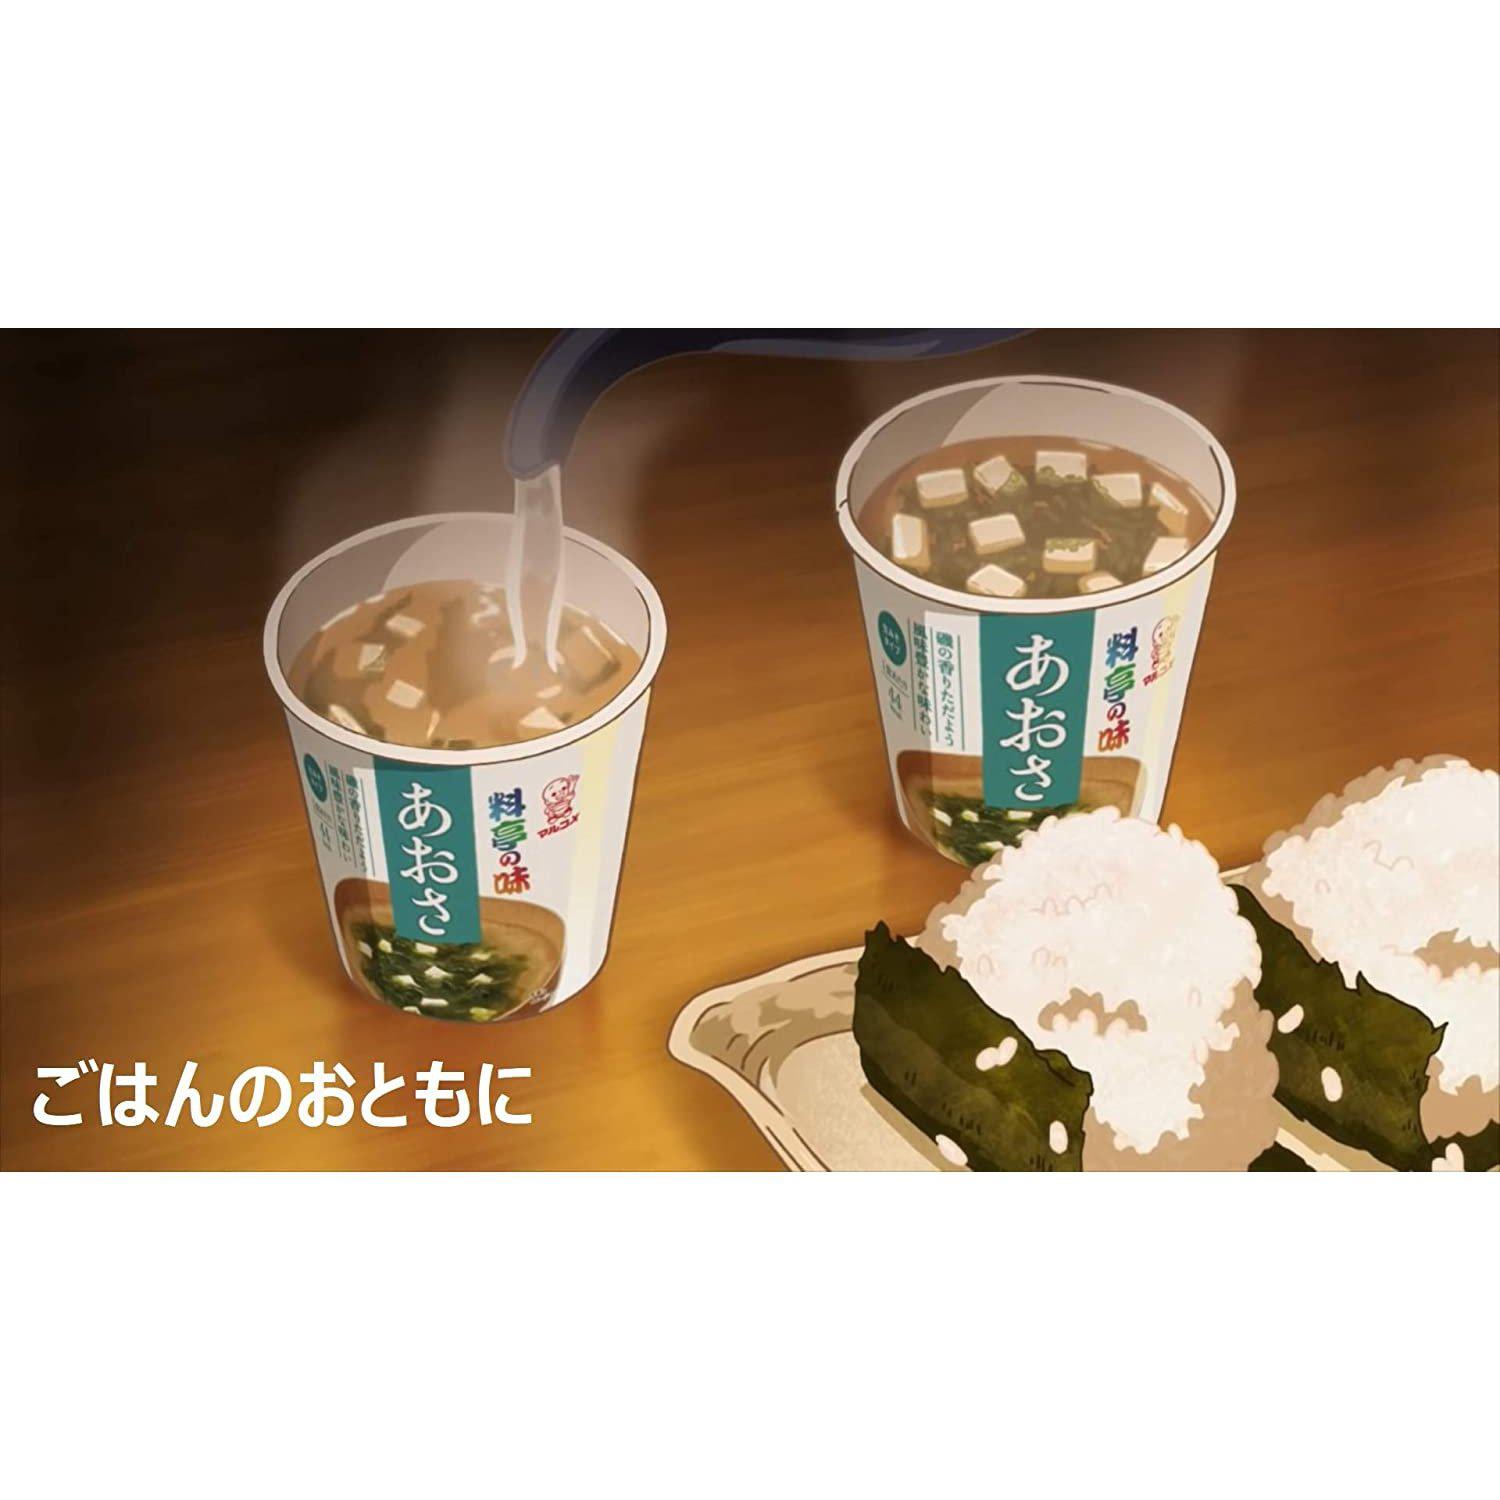 Marukome Ryotei no Aji Cup Instant Aosa Seaweed Miso Soup 22g